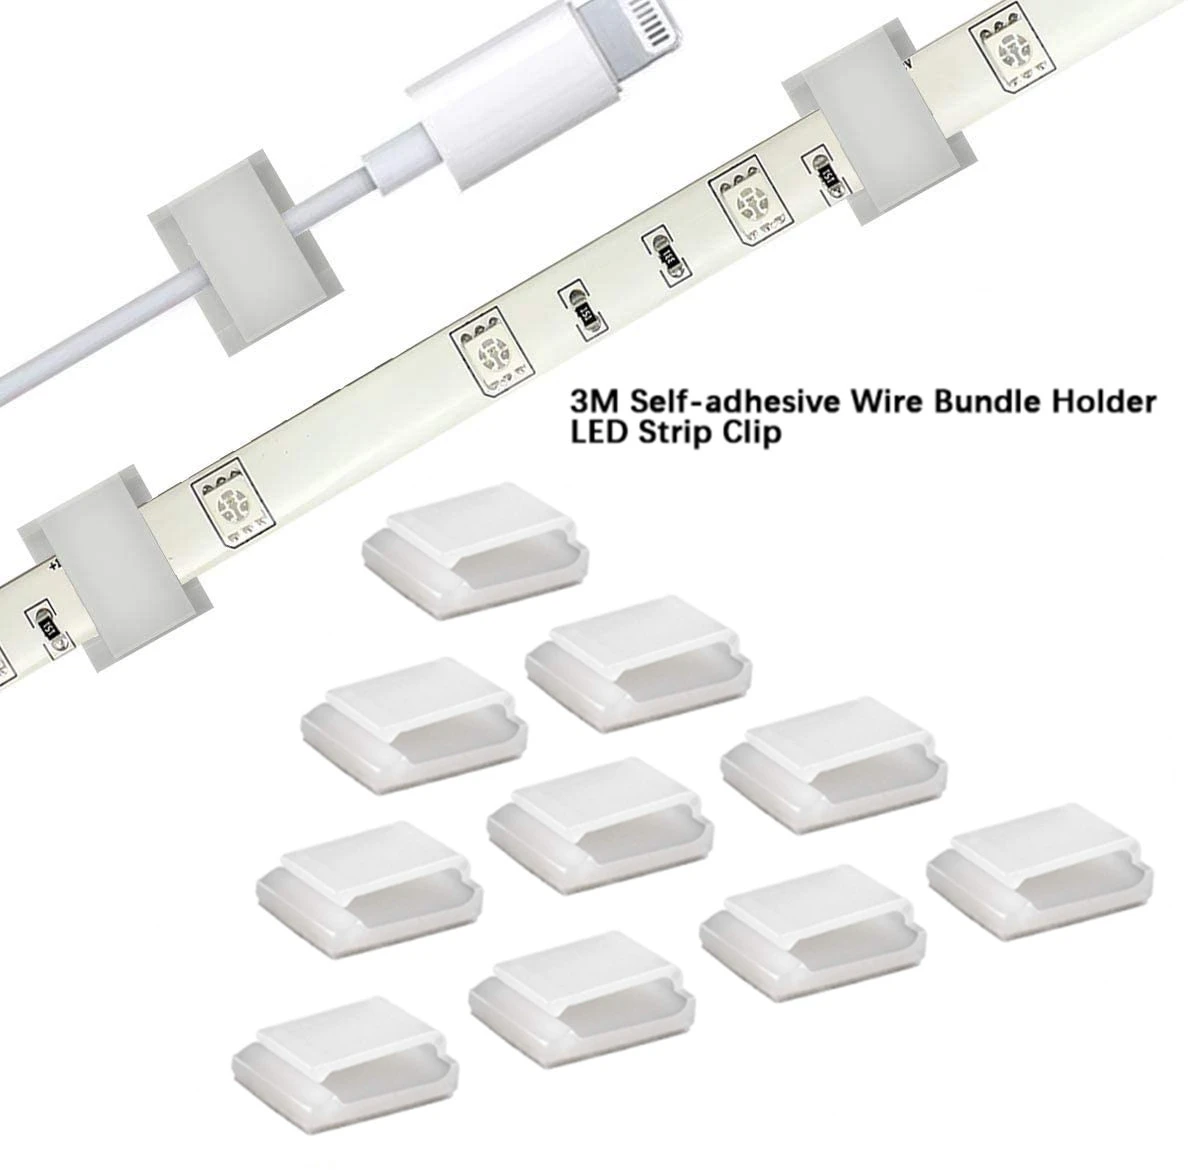 Self-adhesive Wire Bundle Holder Tie Mount Clip for10mm wide Fix LED Strip Lights Connector  Suitable Led Strip Holder